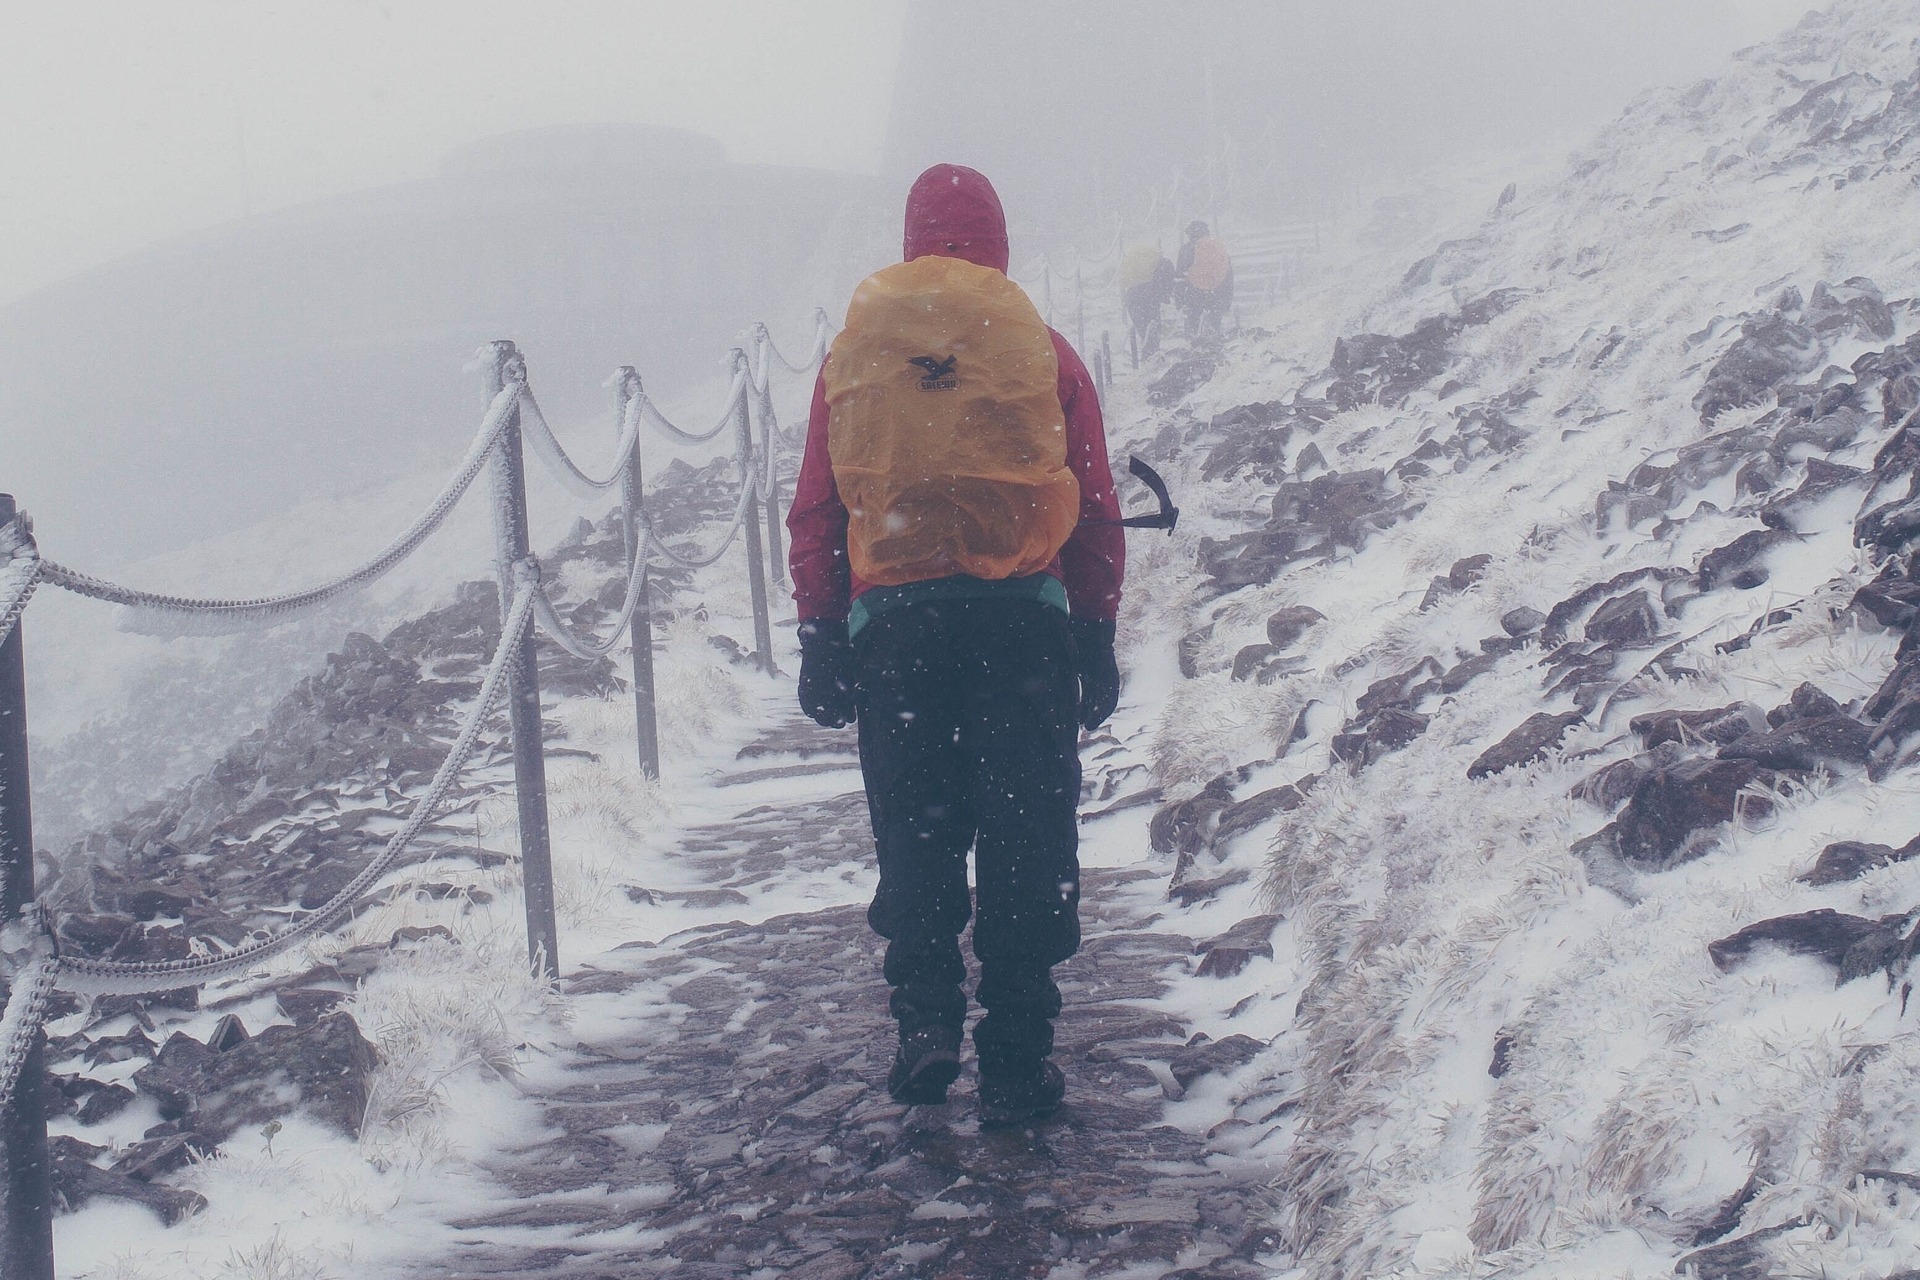 Man climbing a snowy winter mountain path